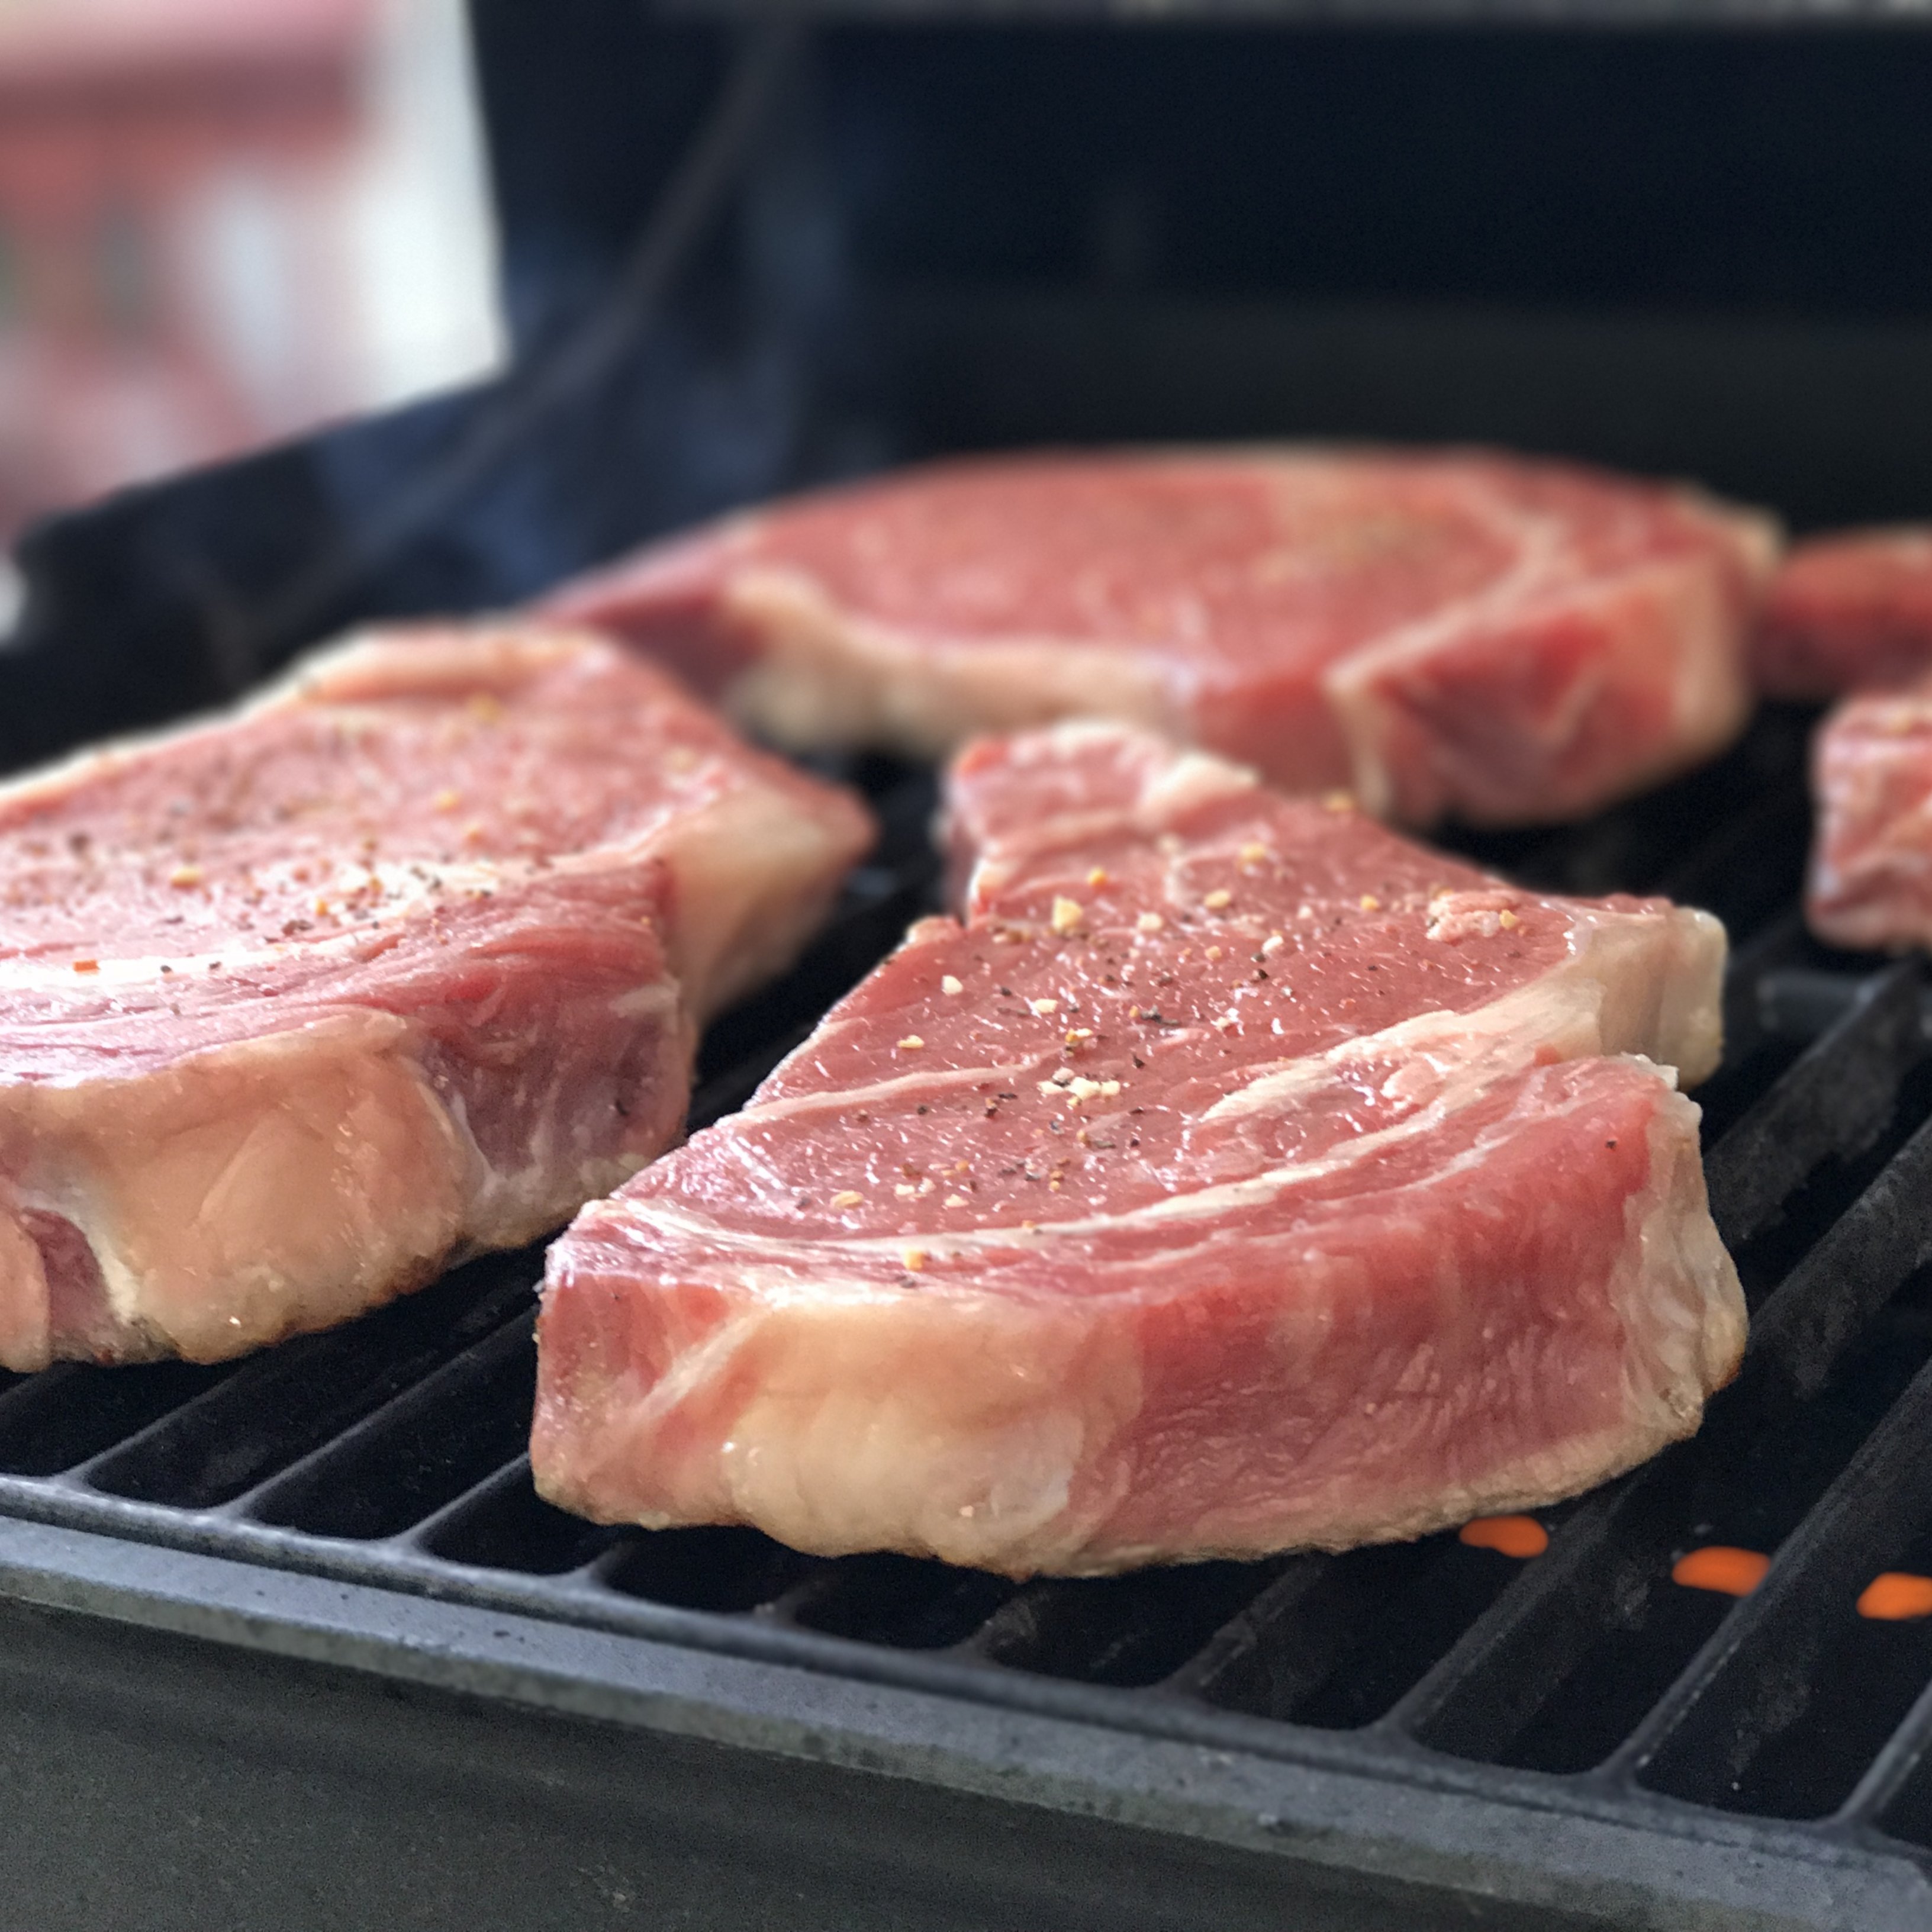 Oxford confirma que comer menos carne se asociaría con un menor riesgo de cáncer